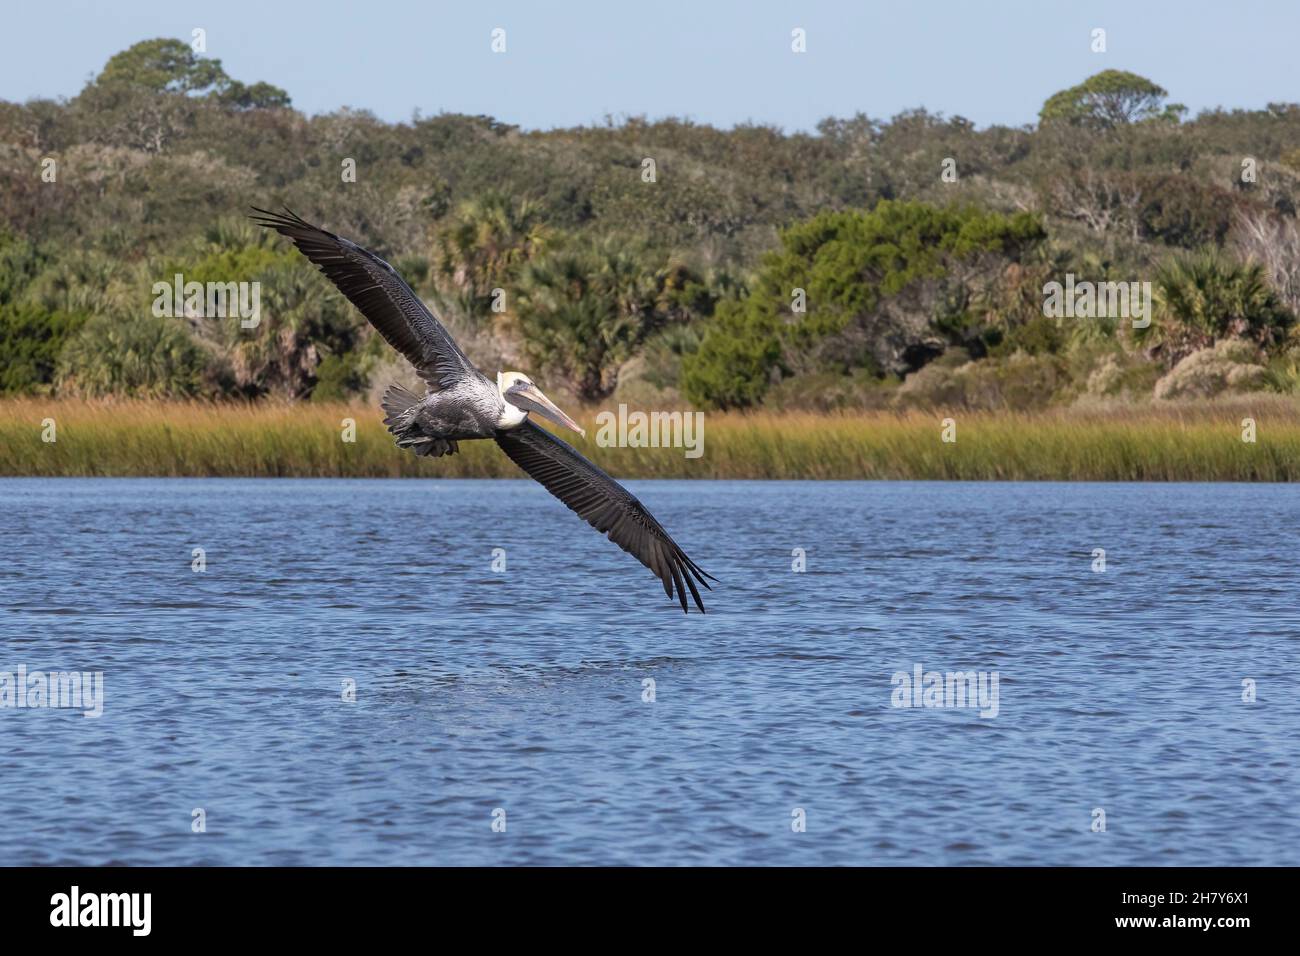 A brown pelican (Pelecanus occidentalis) in flight. Stock Photo